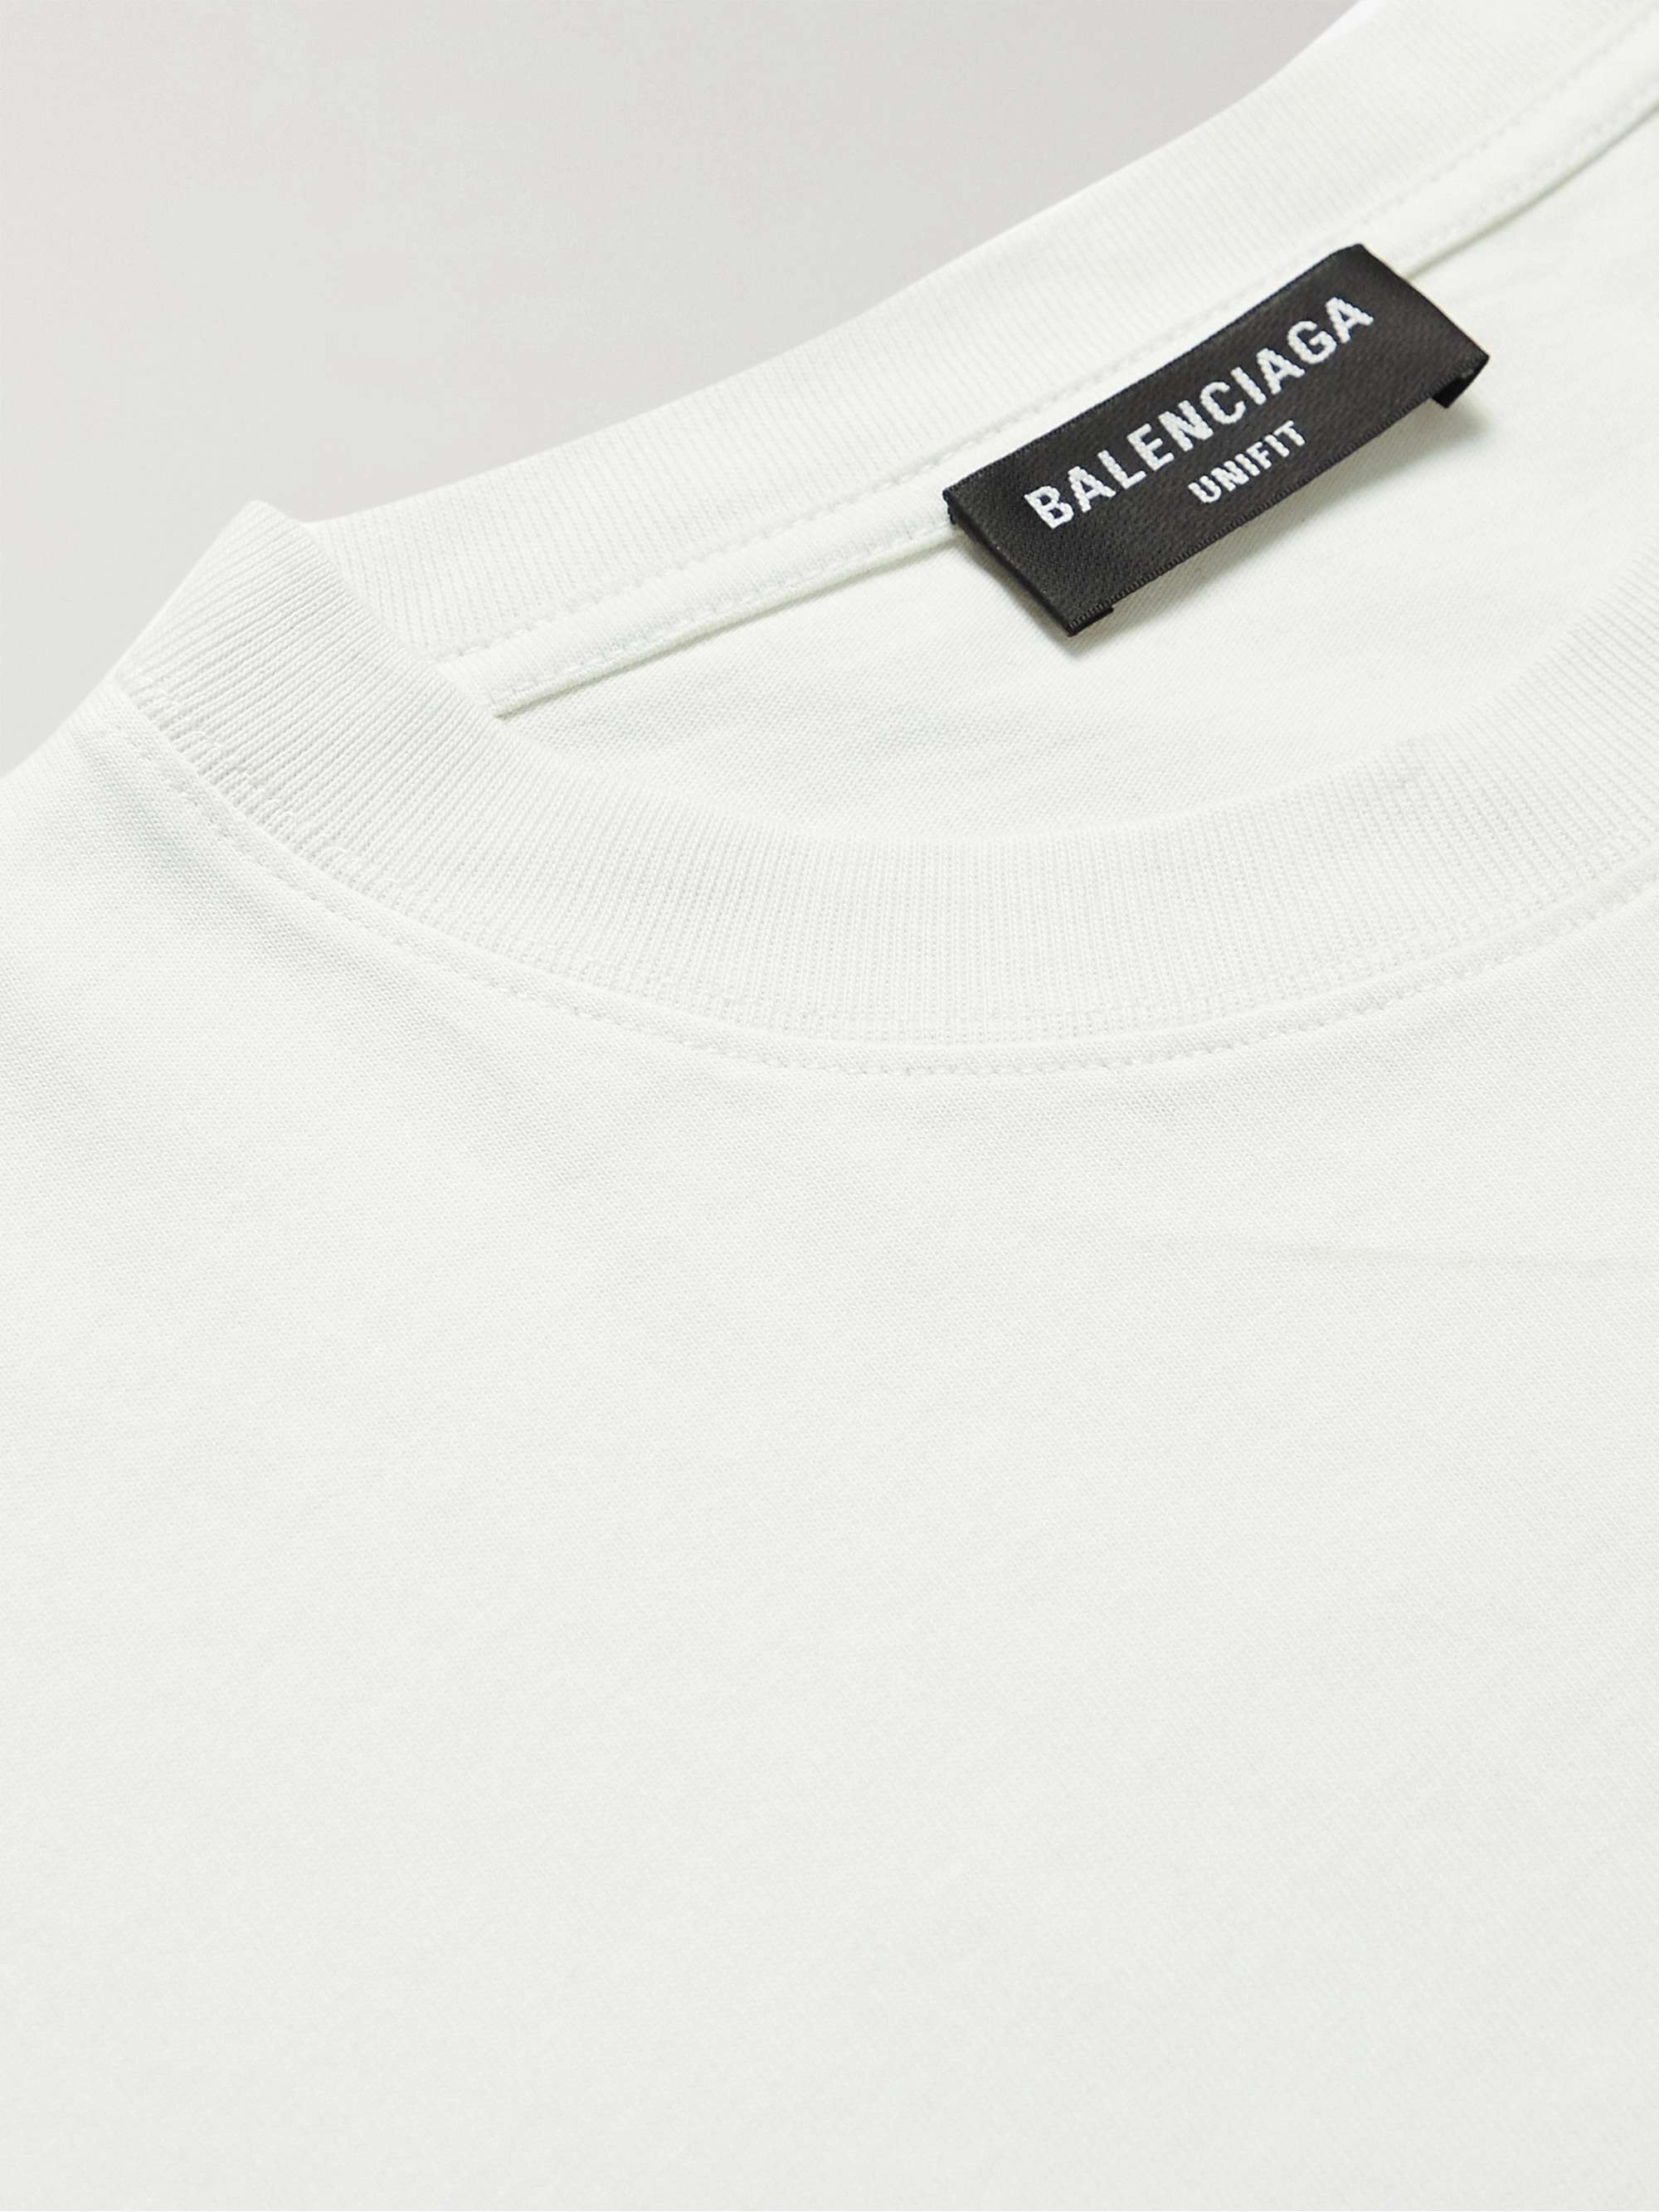 BALENCIAGA Printed Cotton-Jersey T-Shirt